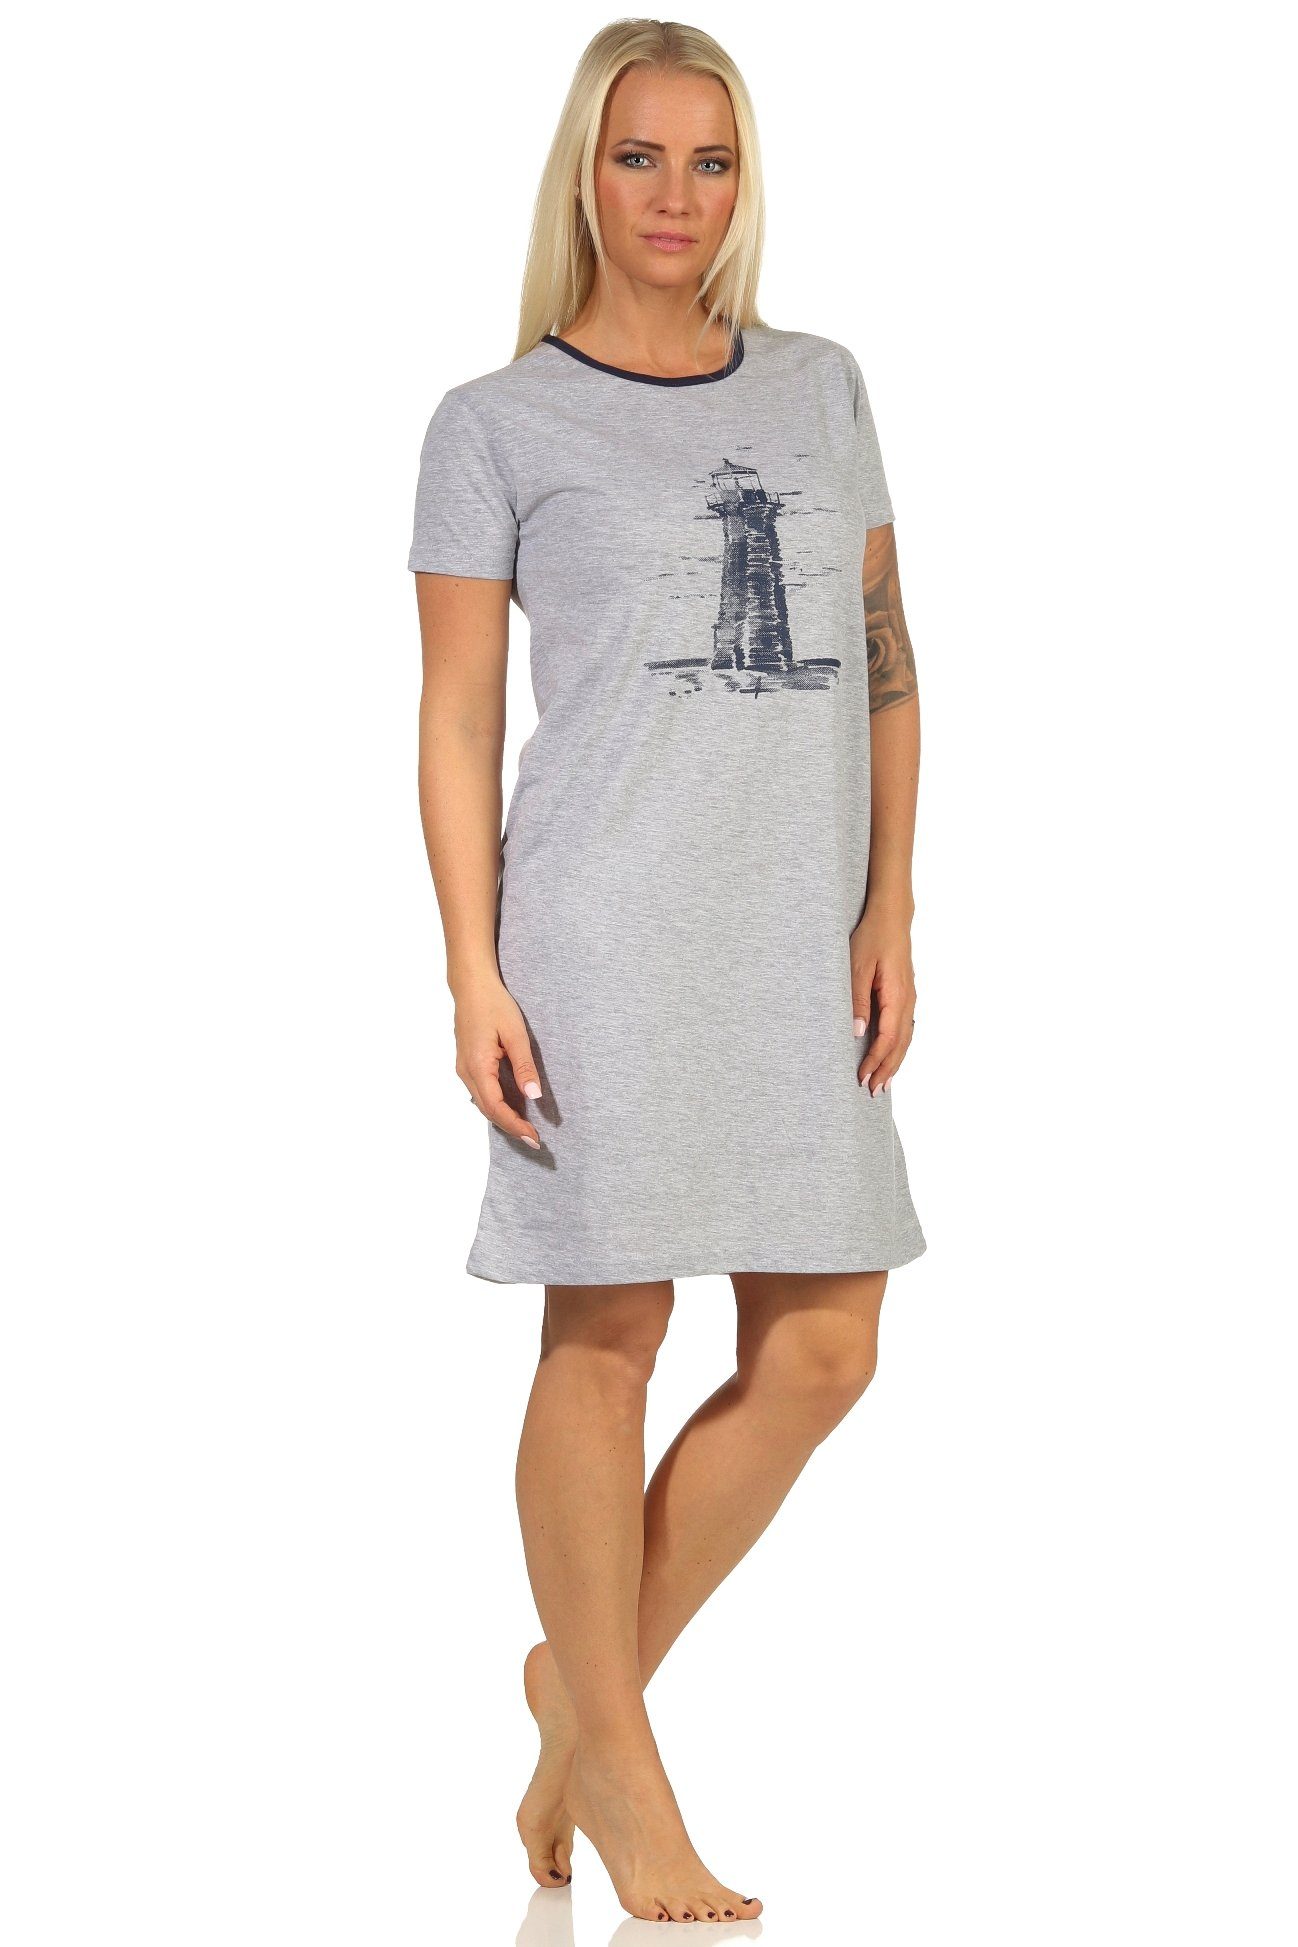 RELAX by als Leuchtturm grau Motiv und im Nachthemd Damen Look Nachthemd kurzarm Normann maritimen